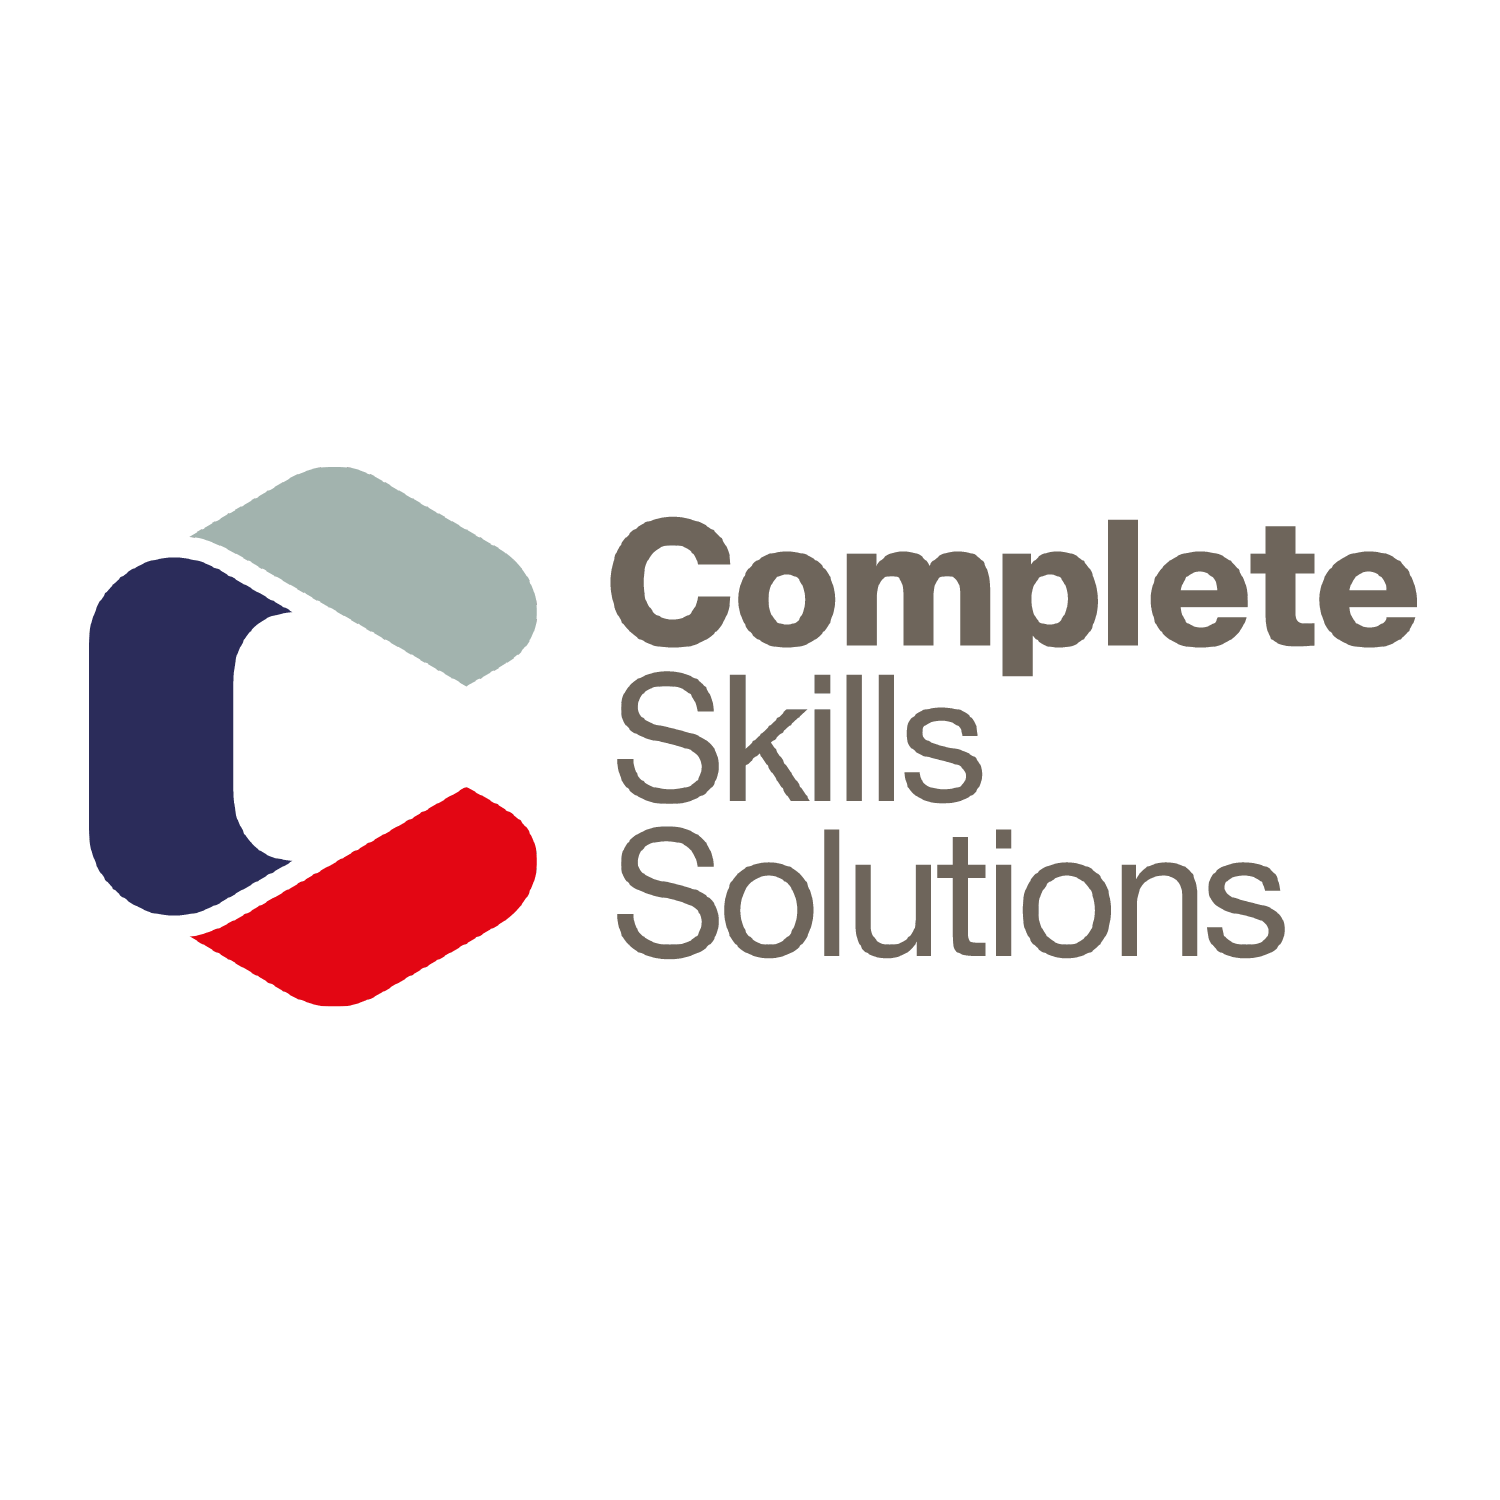 Complete Skills Solutions logo